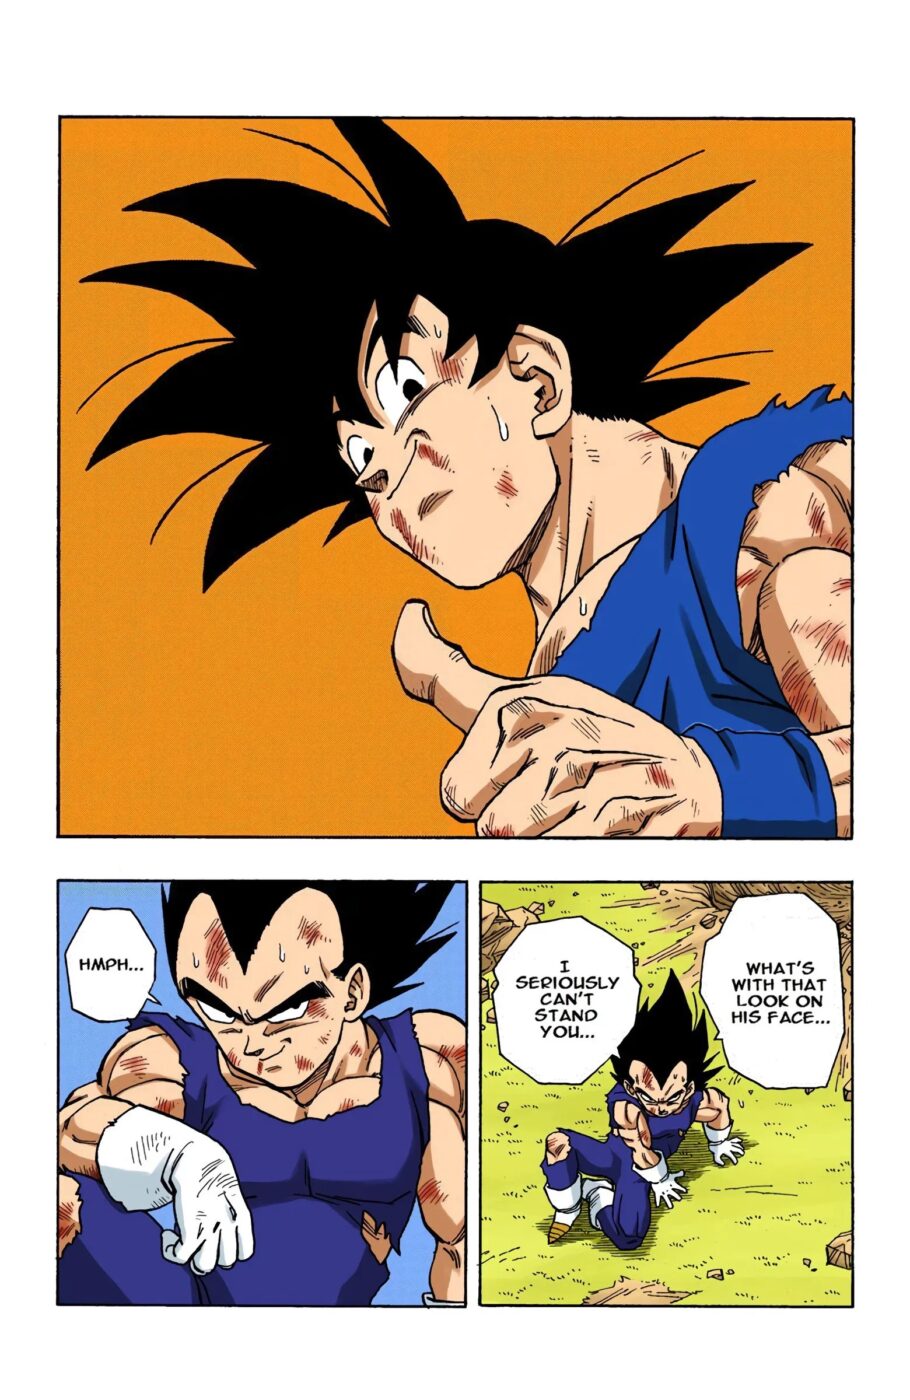 Mangá de Dragon Ball Super revela o jeito surpreendente como Goku e Vegeta  adotaram o símbolo do Whis nas roupas dele - Critical Hits